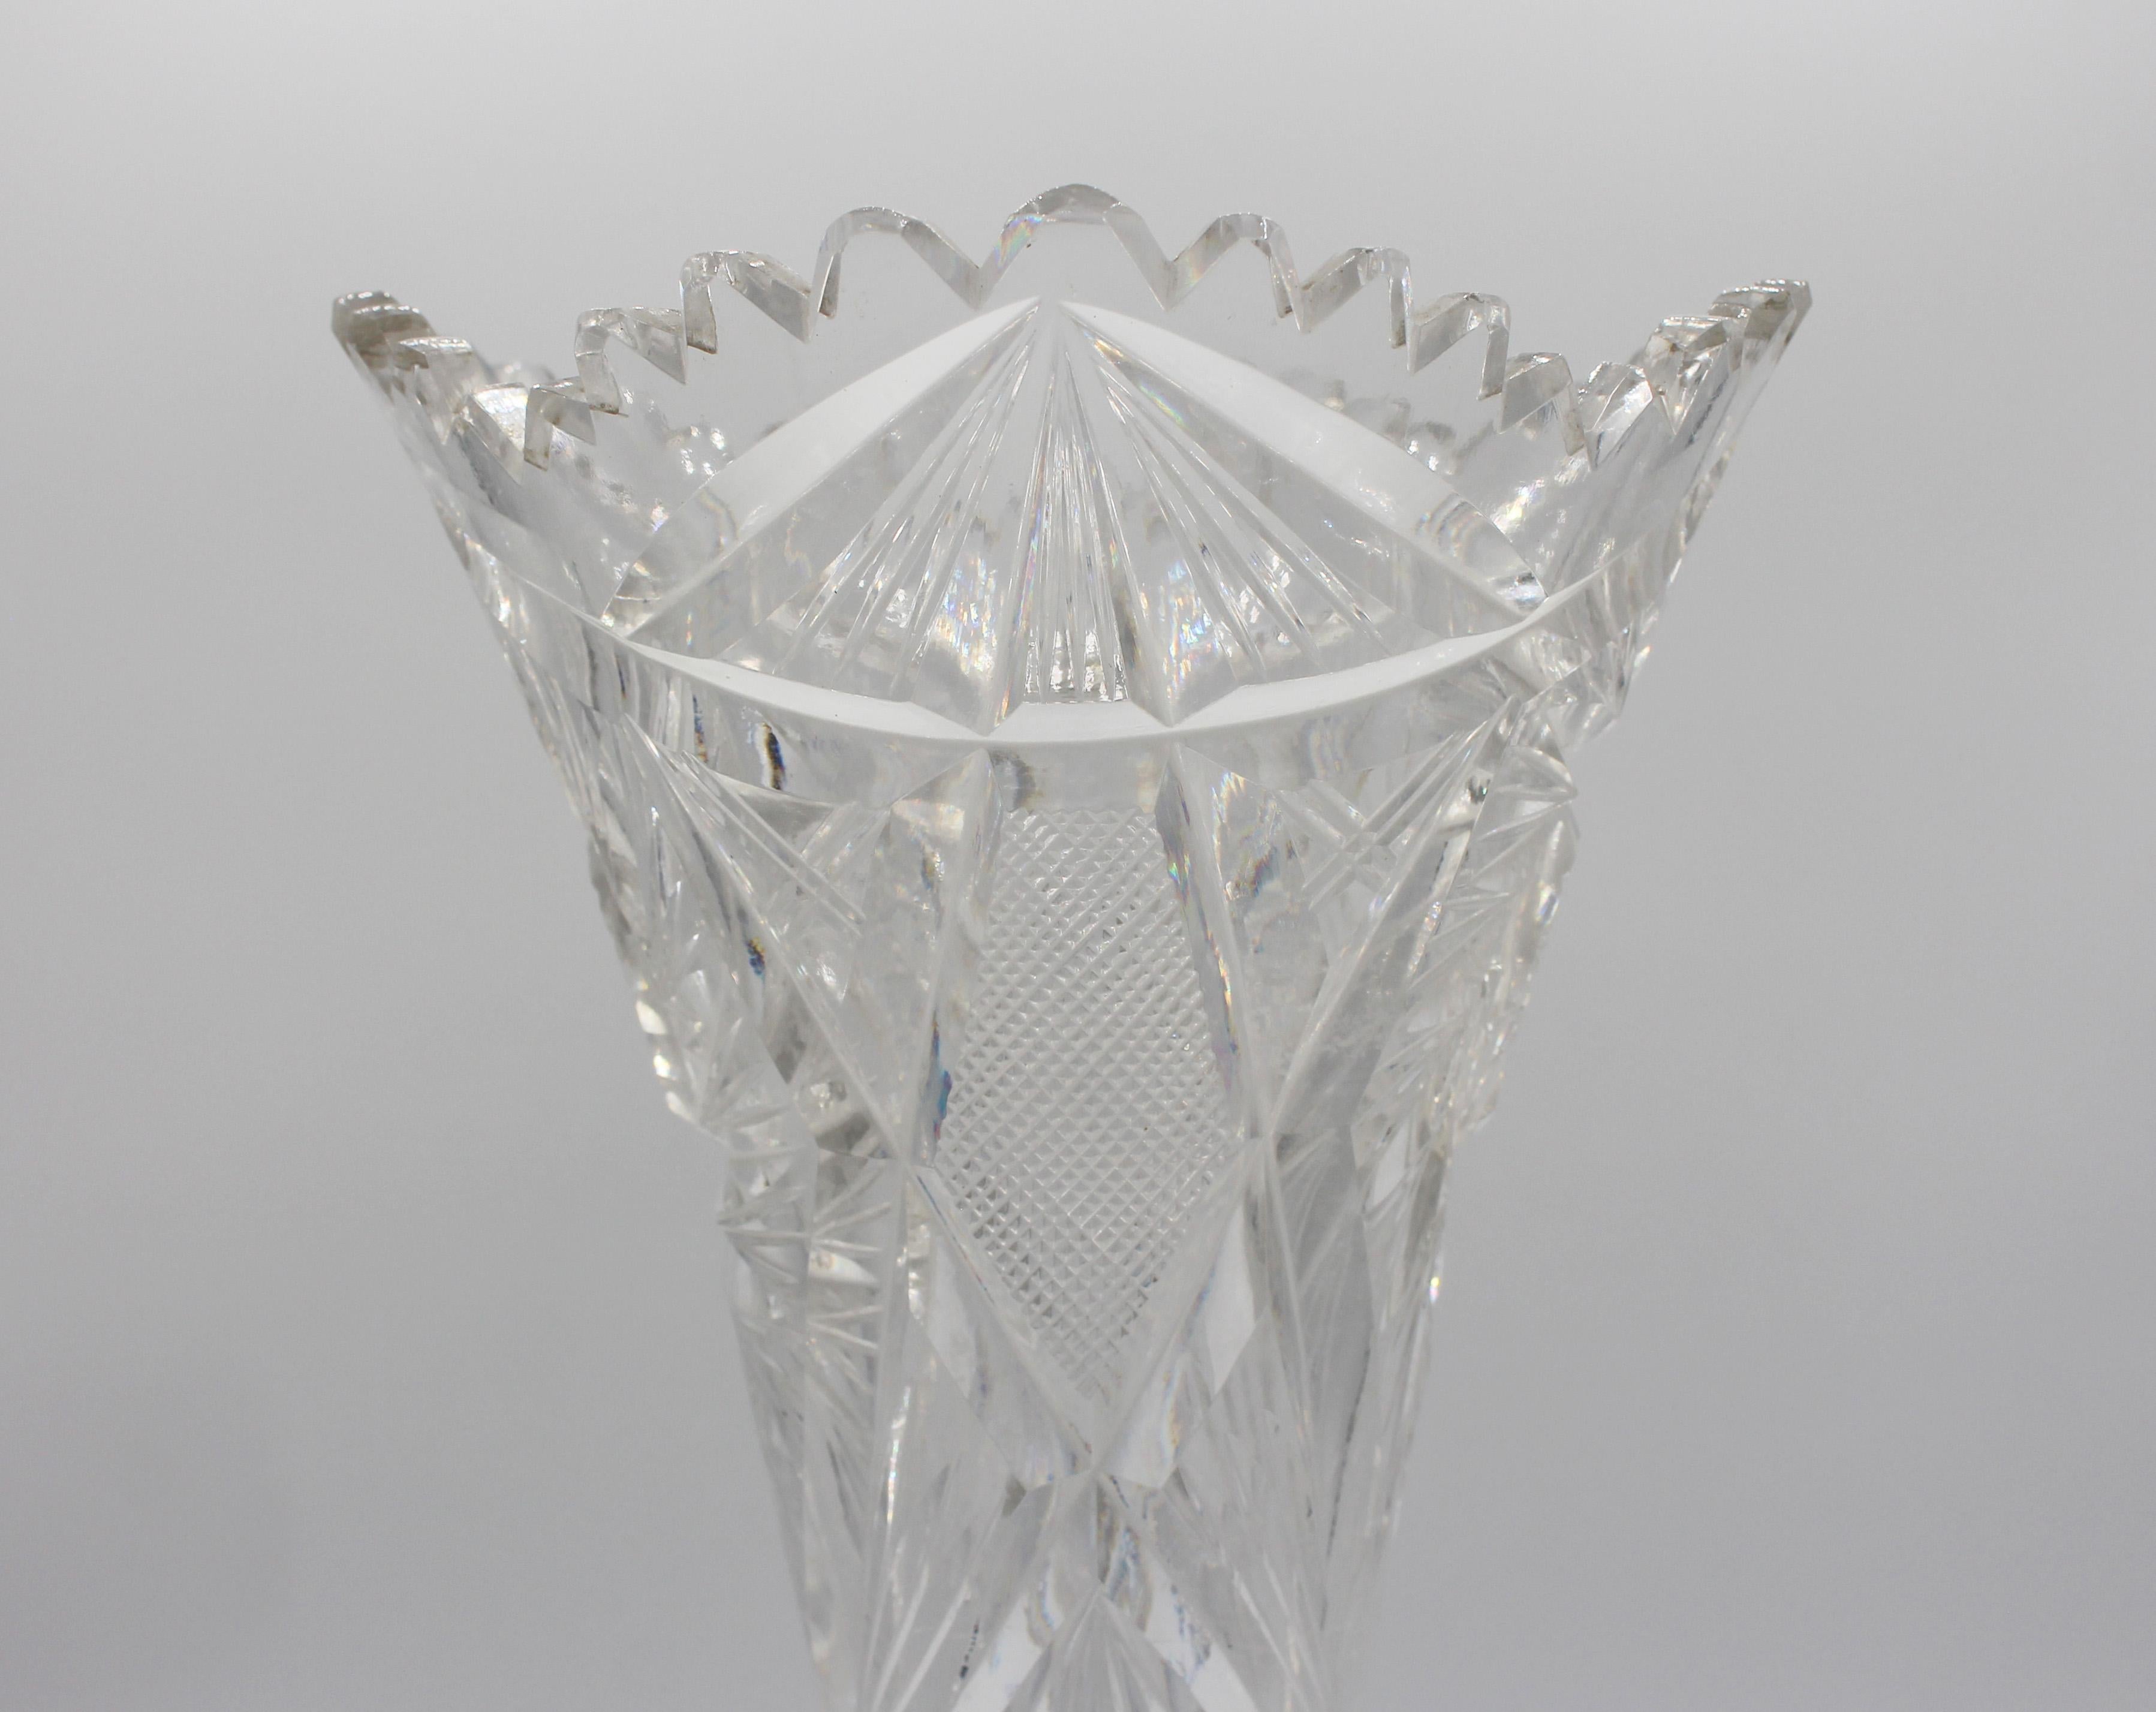 19th Century American Cut Glass Trumpet Vase